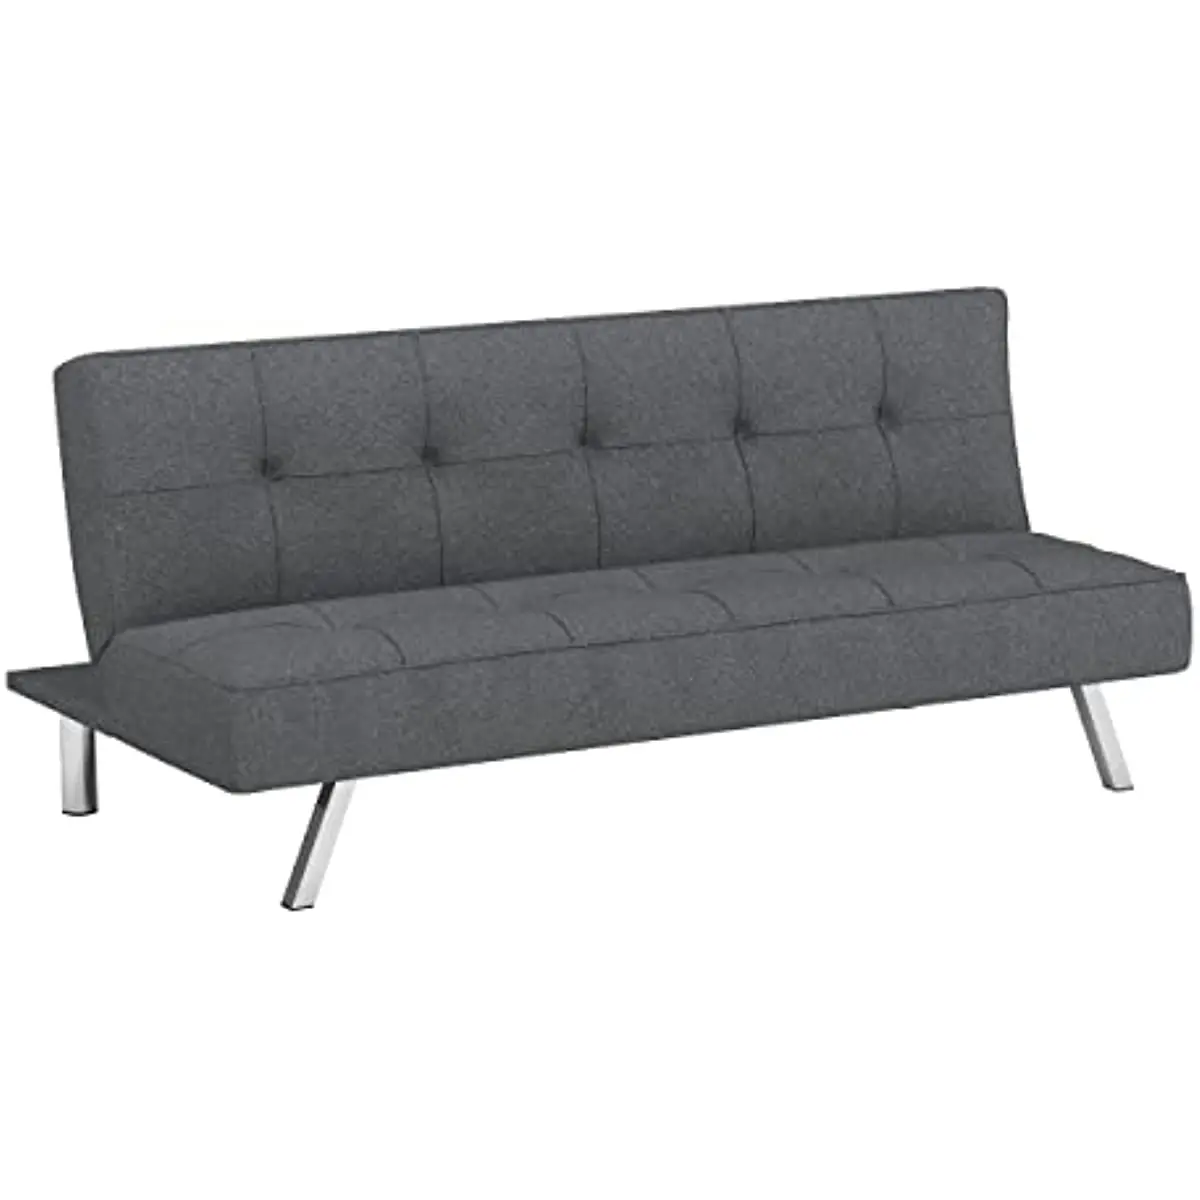 

Rane Convertible Sofa Bed, 66.1" W x 33.1" D x 29.5" H, Charcoal